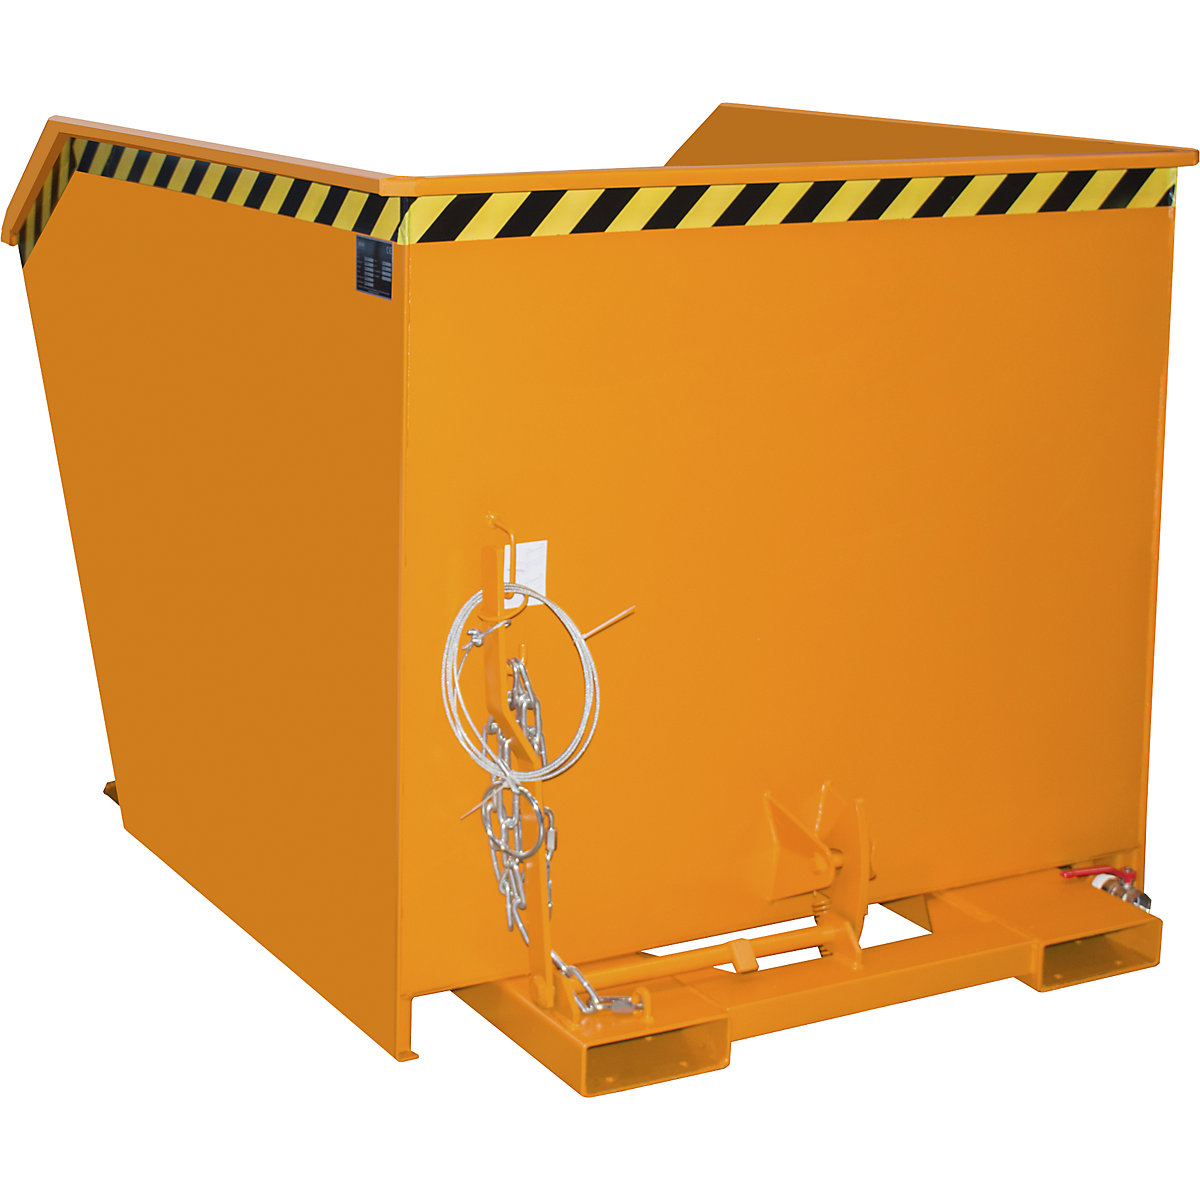 SGU skip for metal swarf – eurokraft pro, capacity 1.5 m³, yellow orange-5